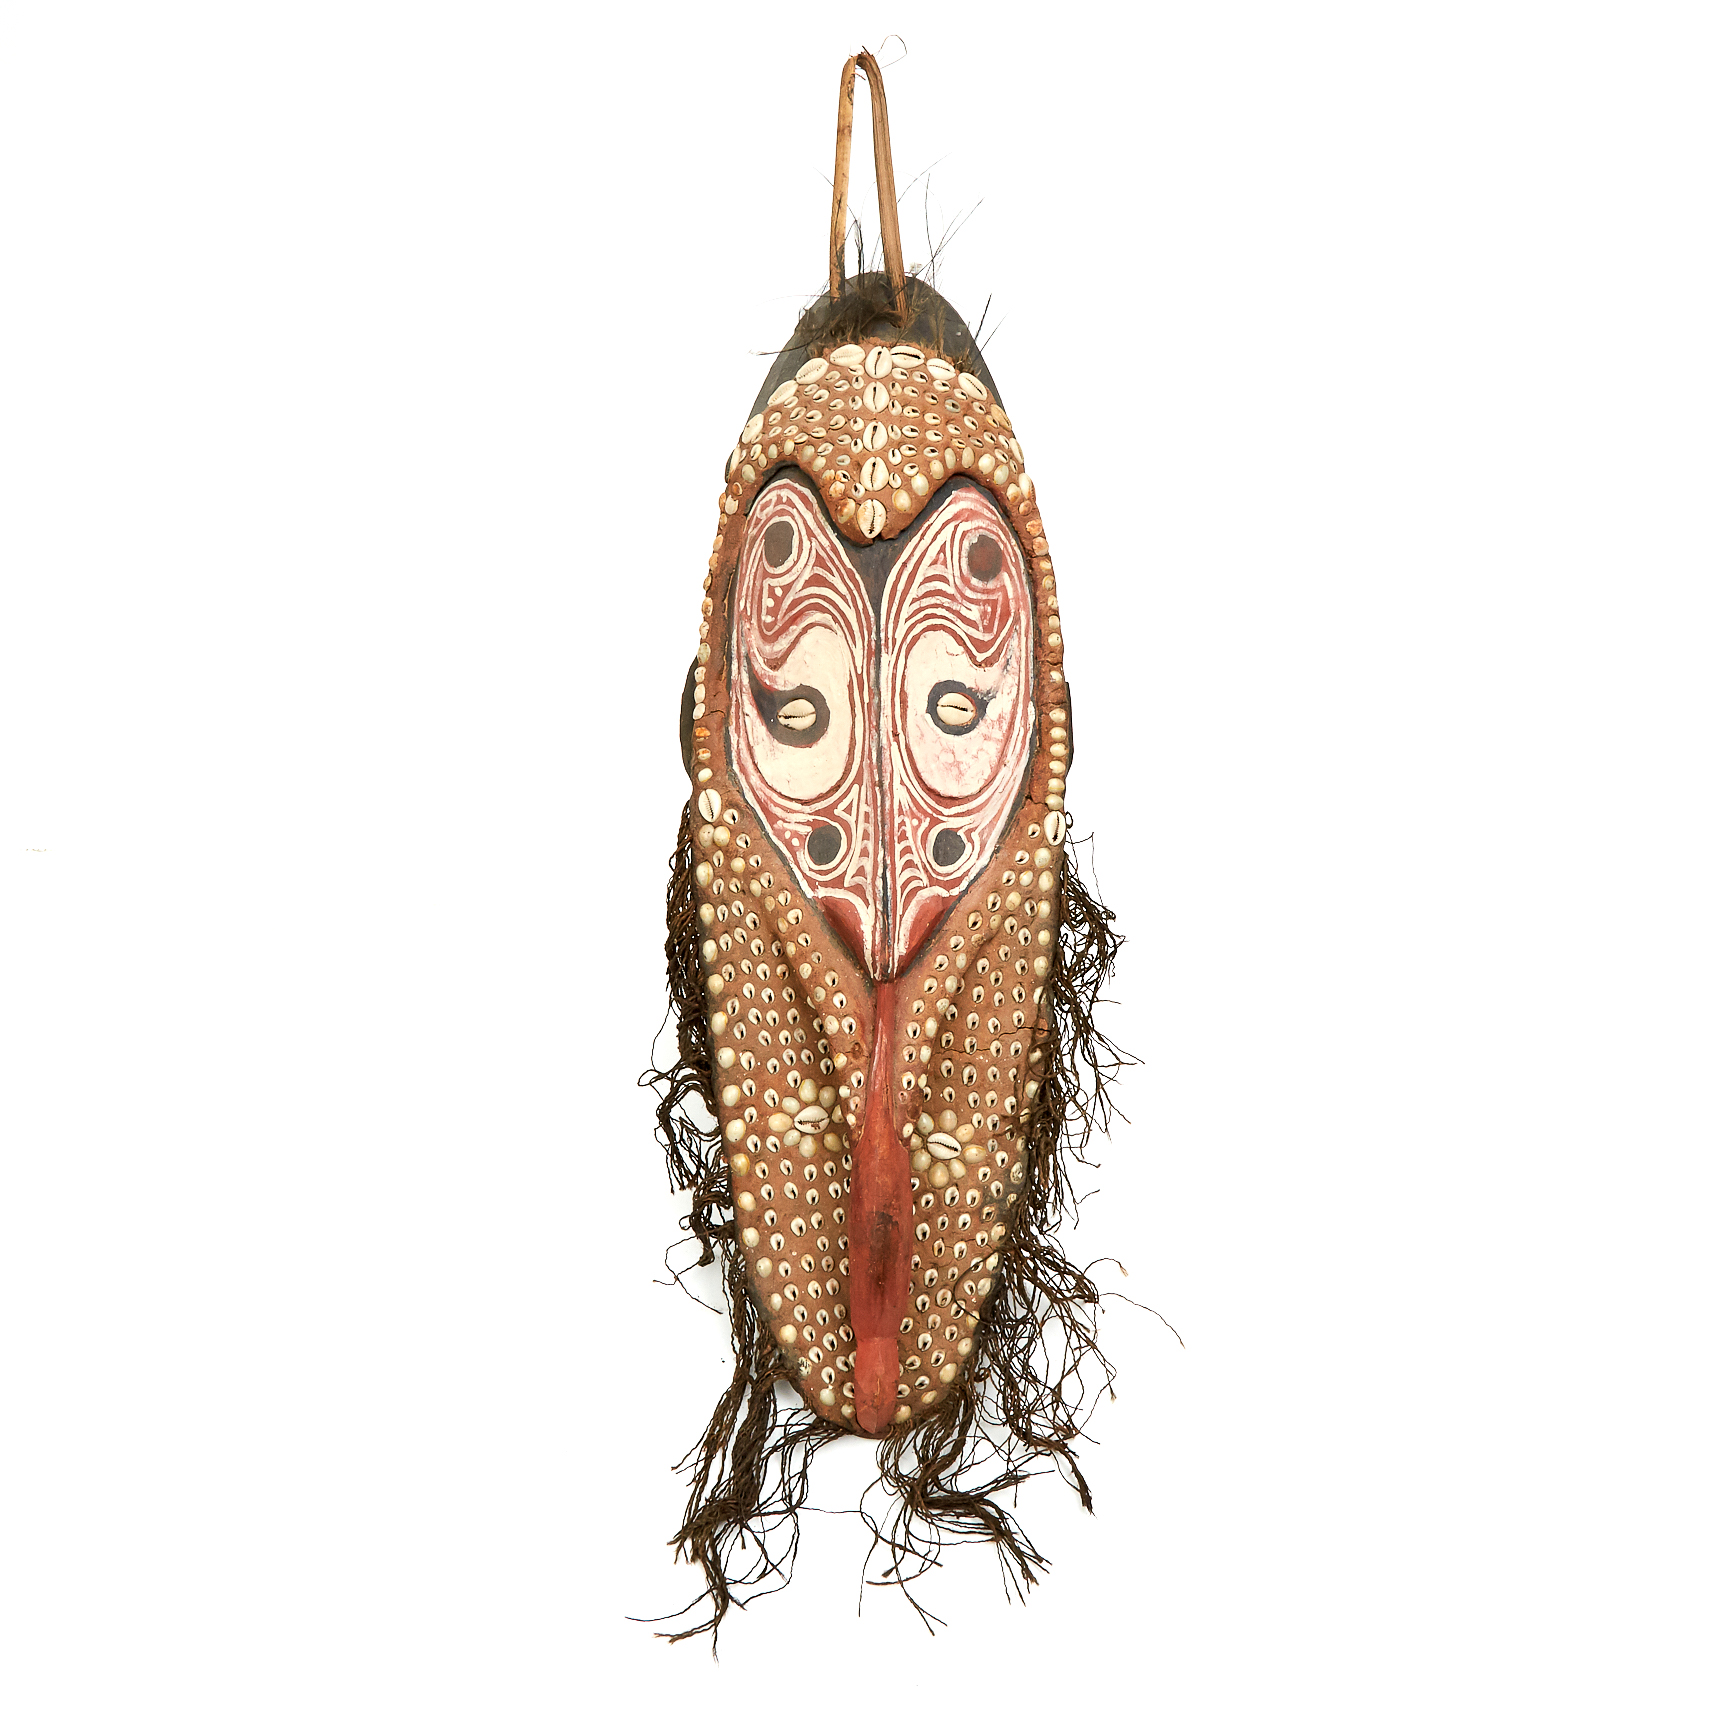 Iatmul Spirit Mask, Sepik River, Papua New Guinea